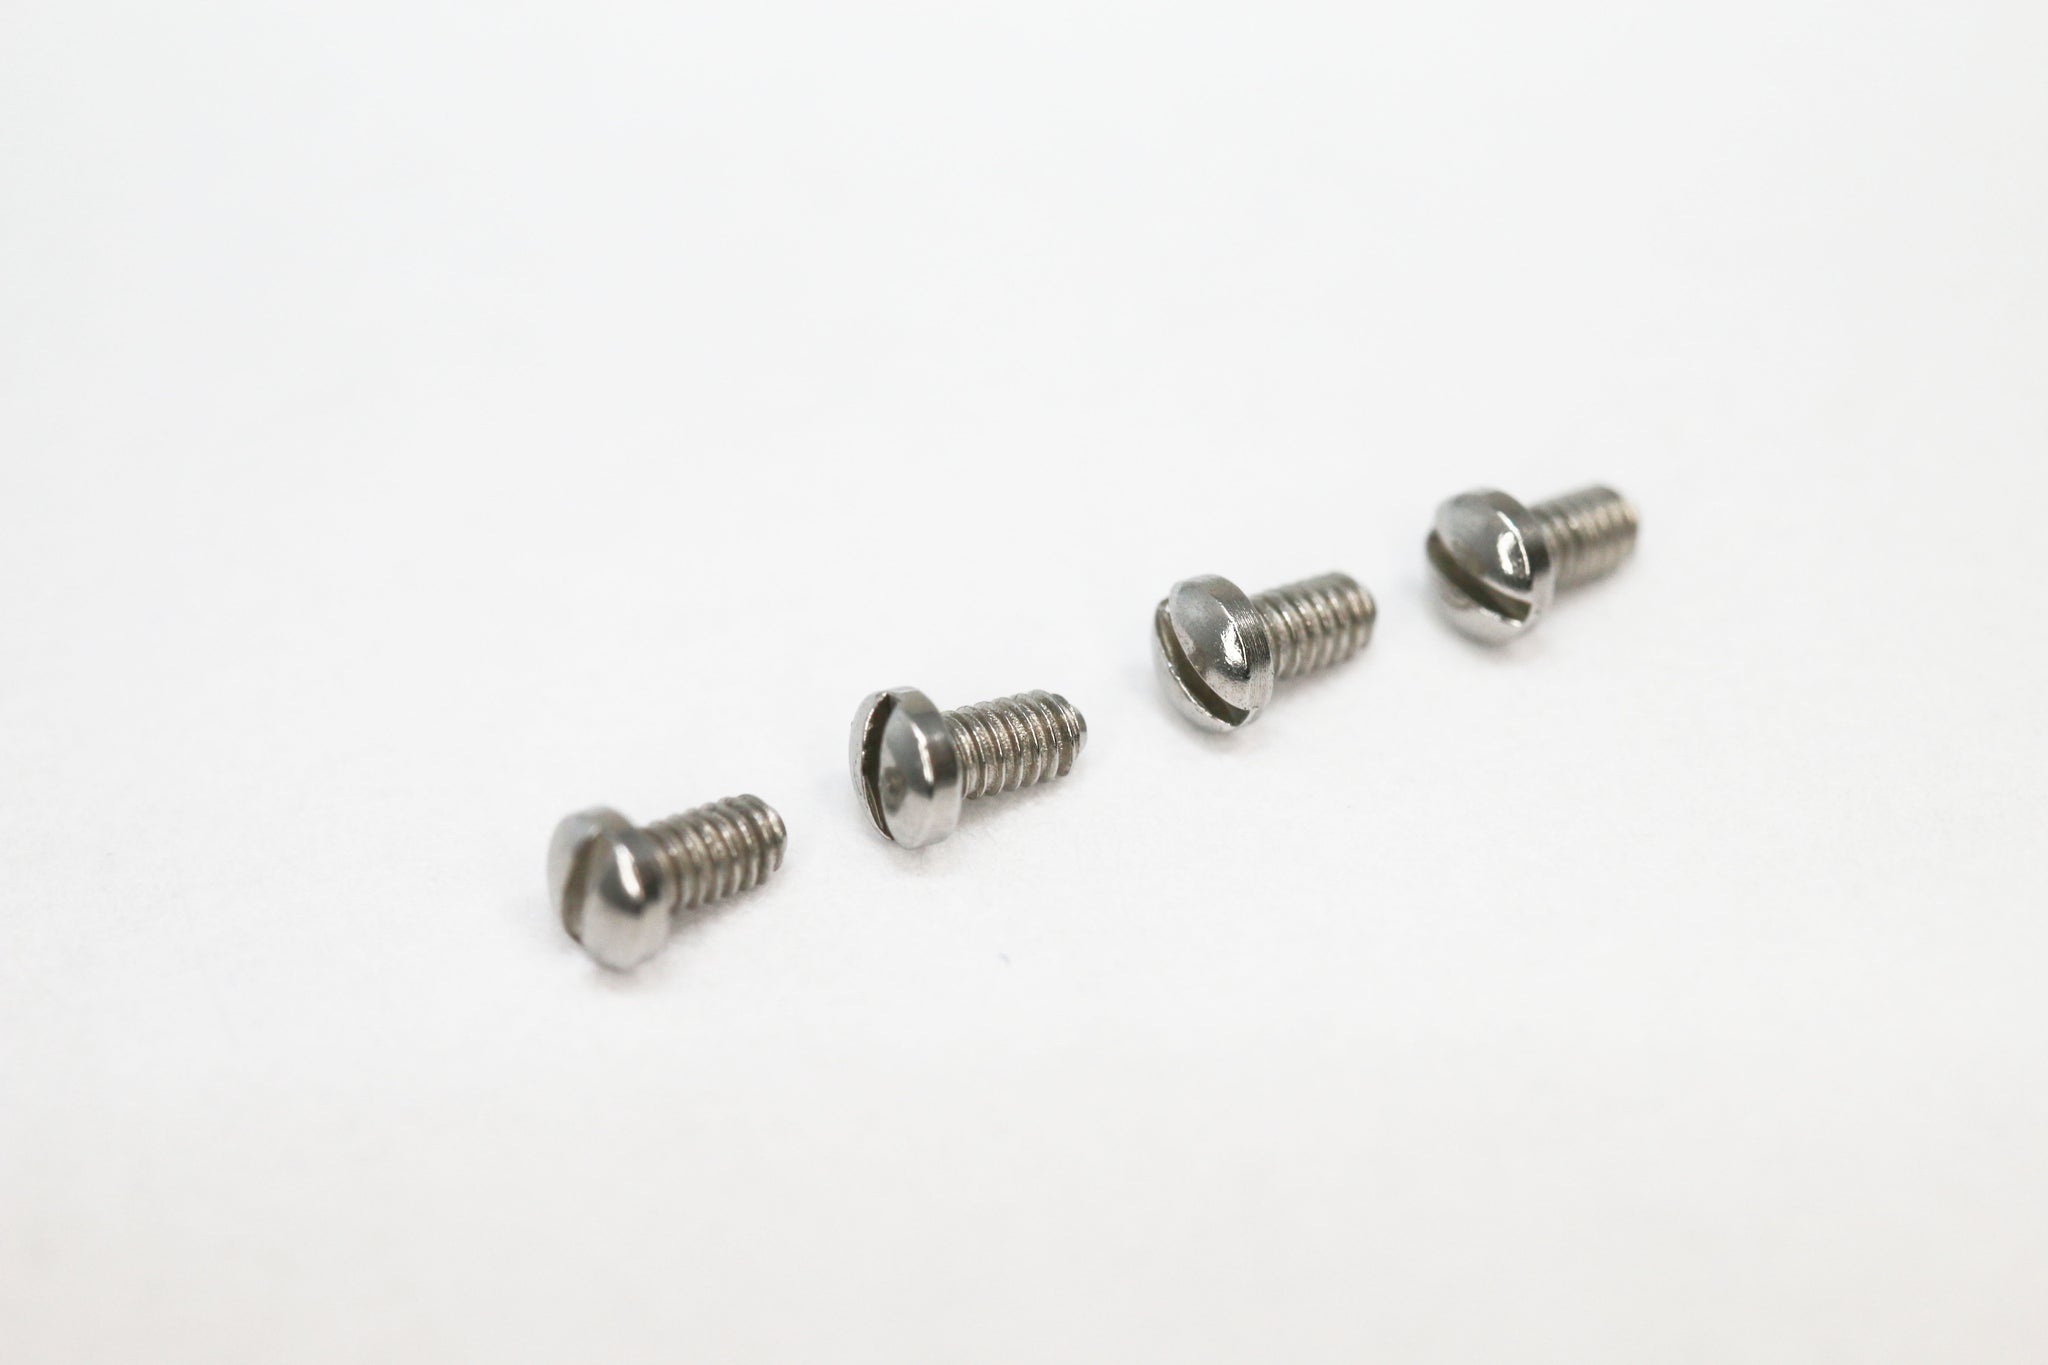 ray ban replacement hinge screws